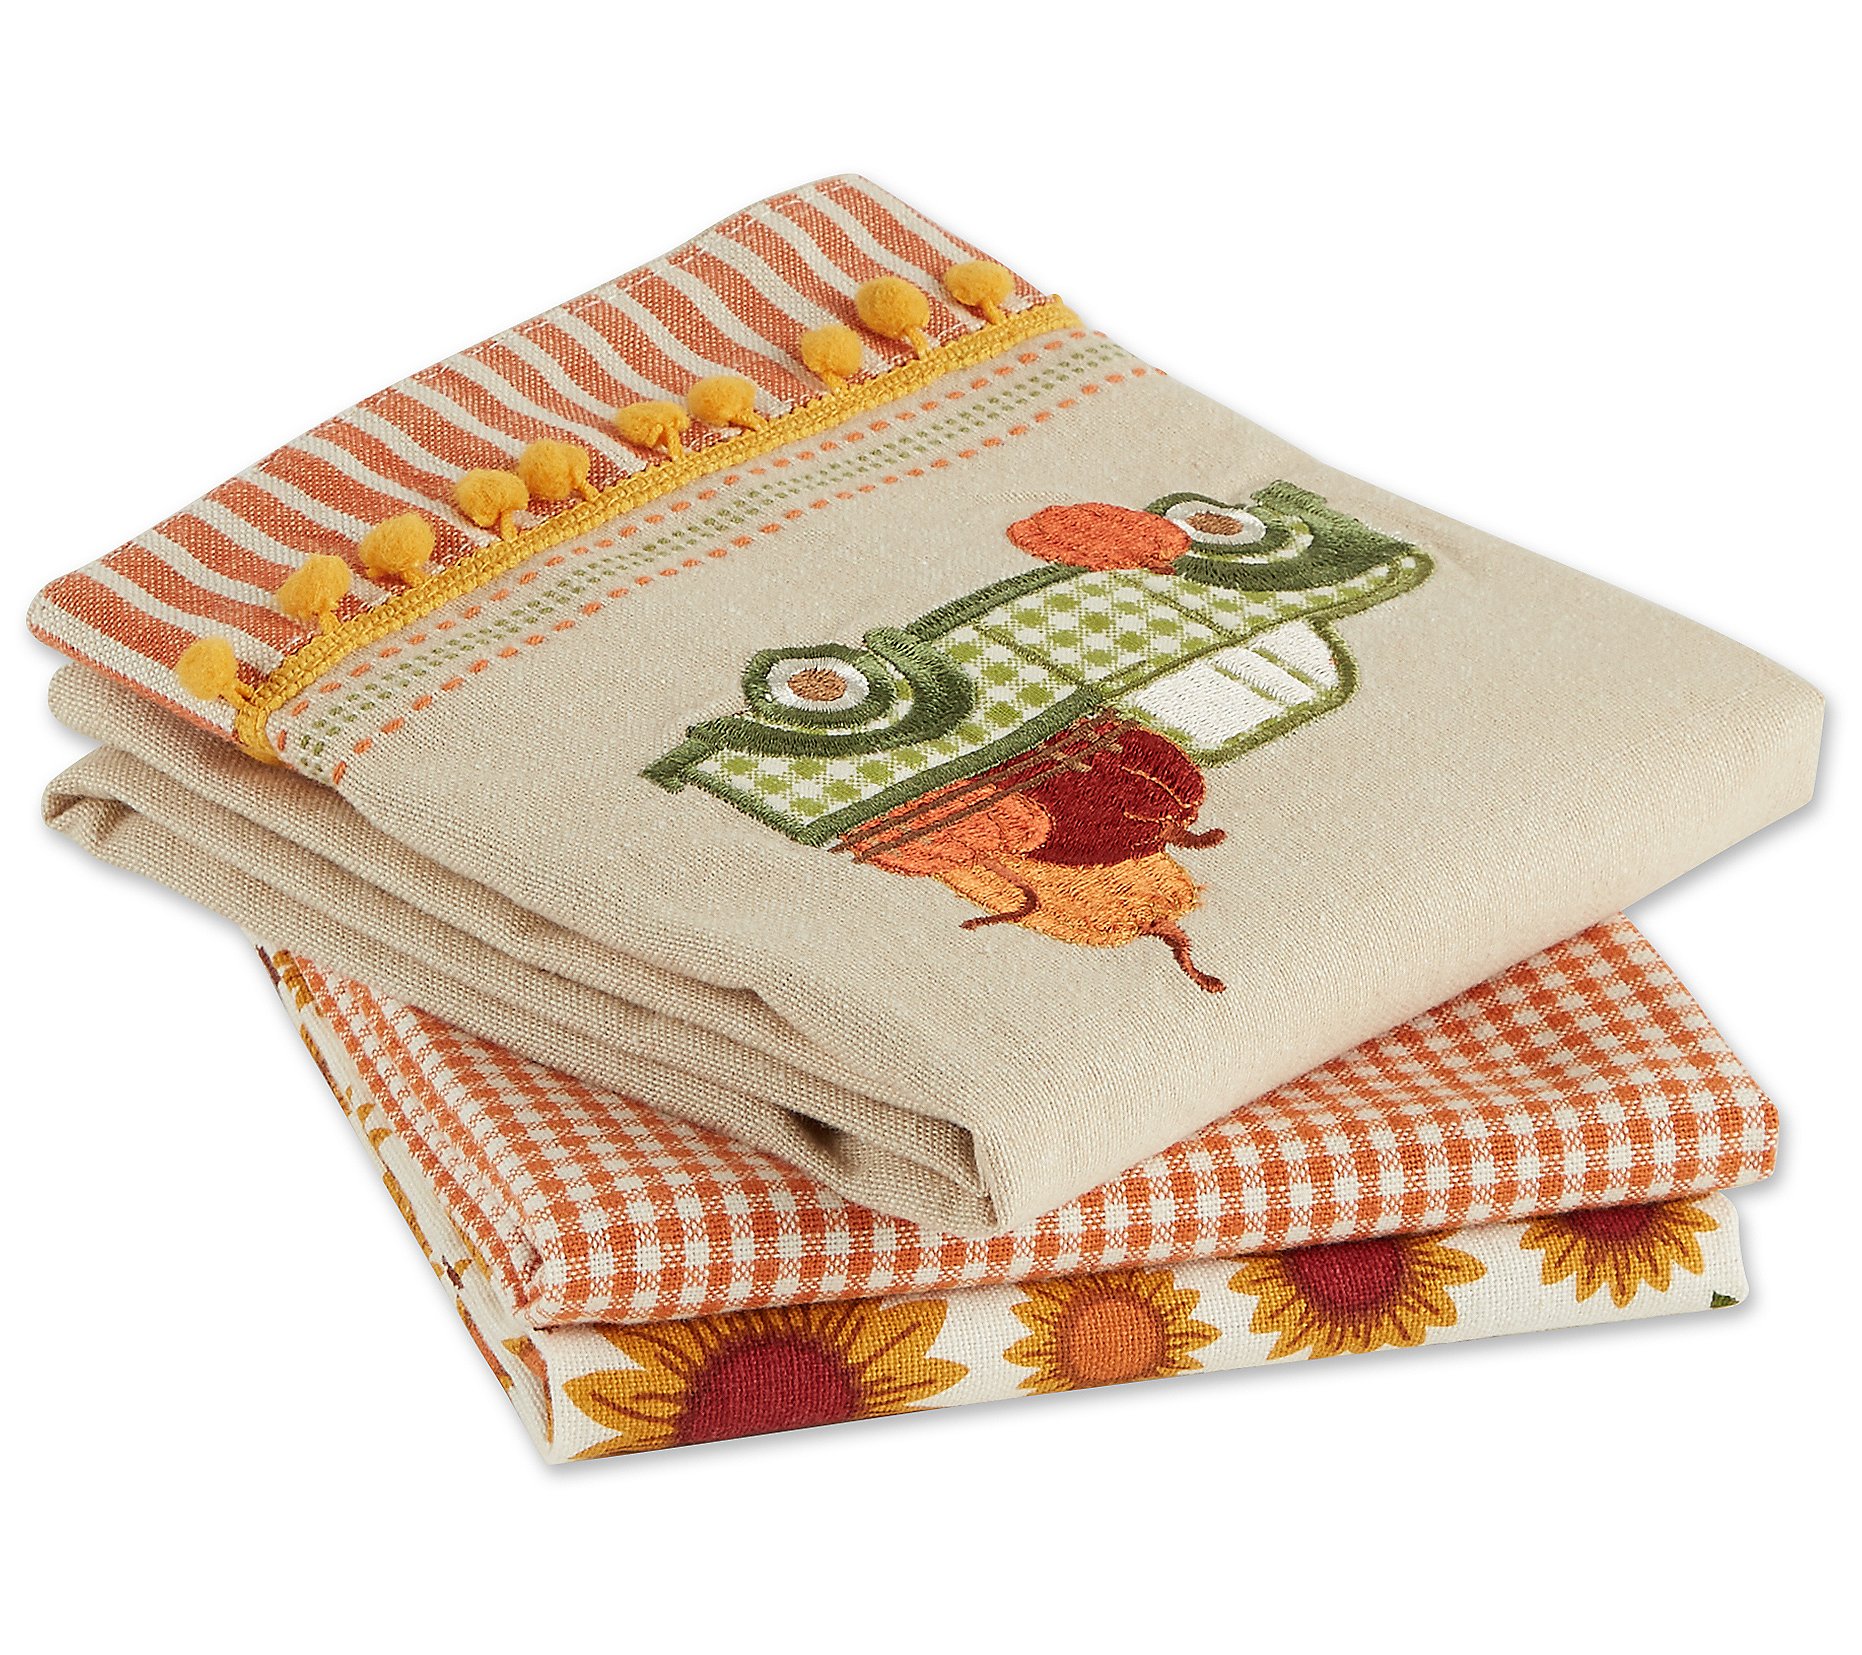 Design Imports Set of 3 Pumpkin Patch Truck Kit chen Towels